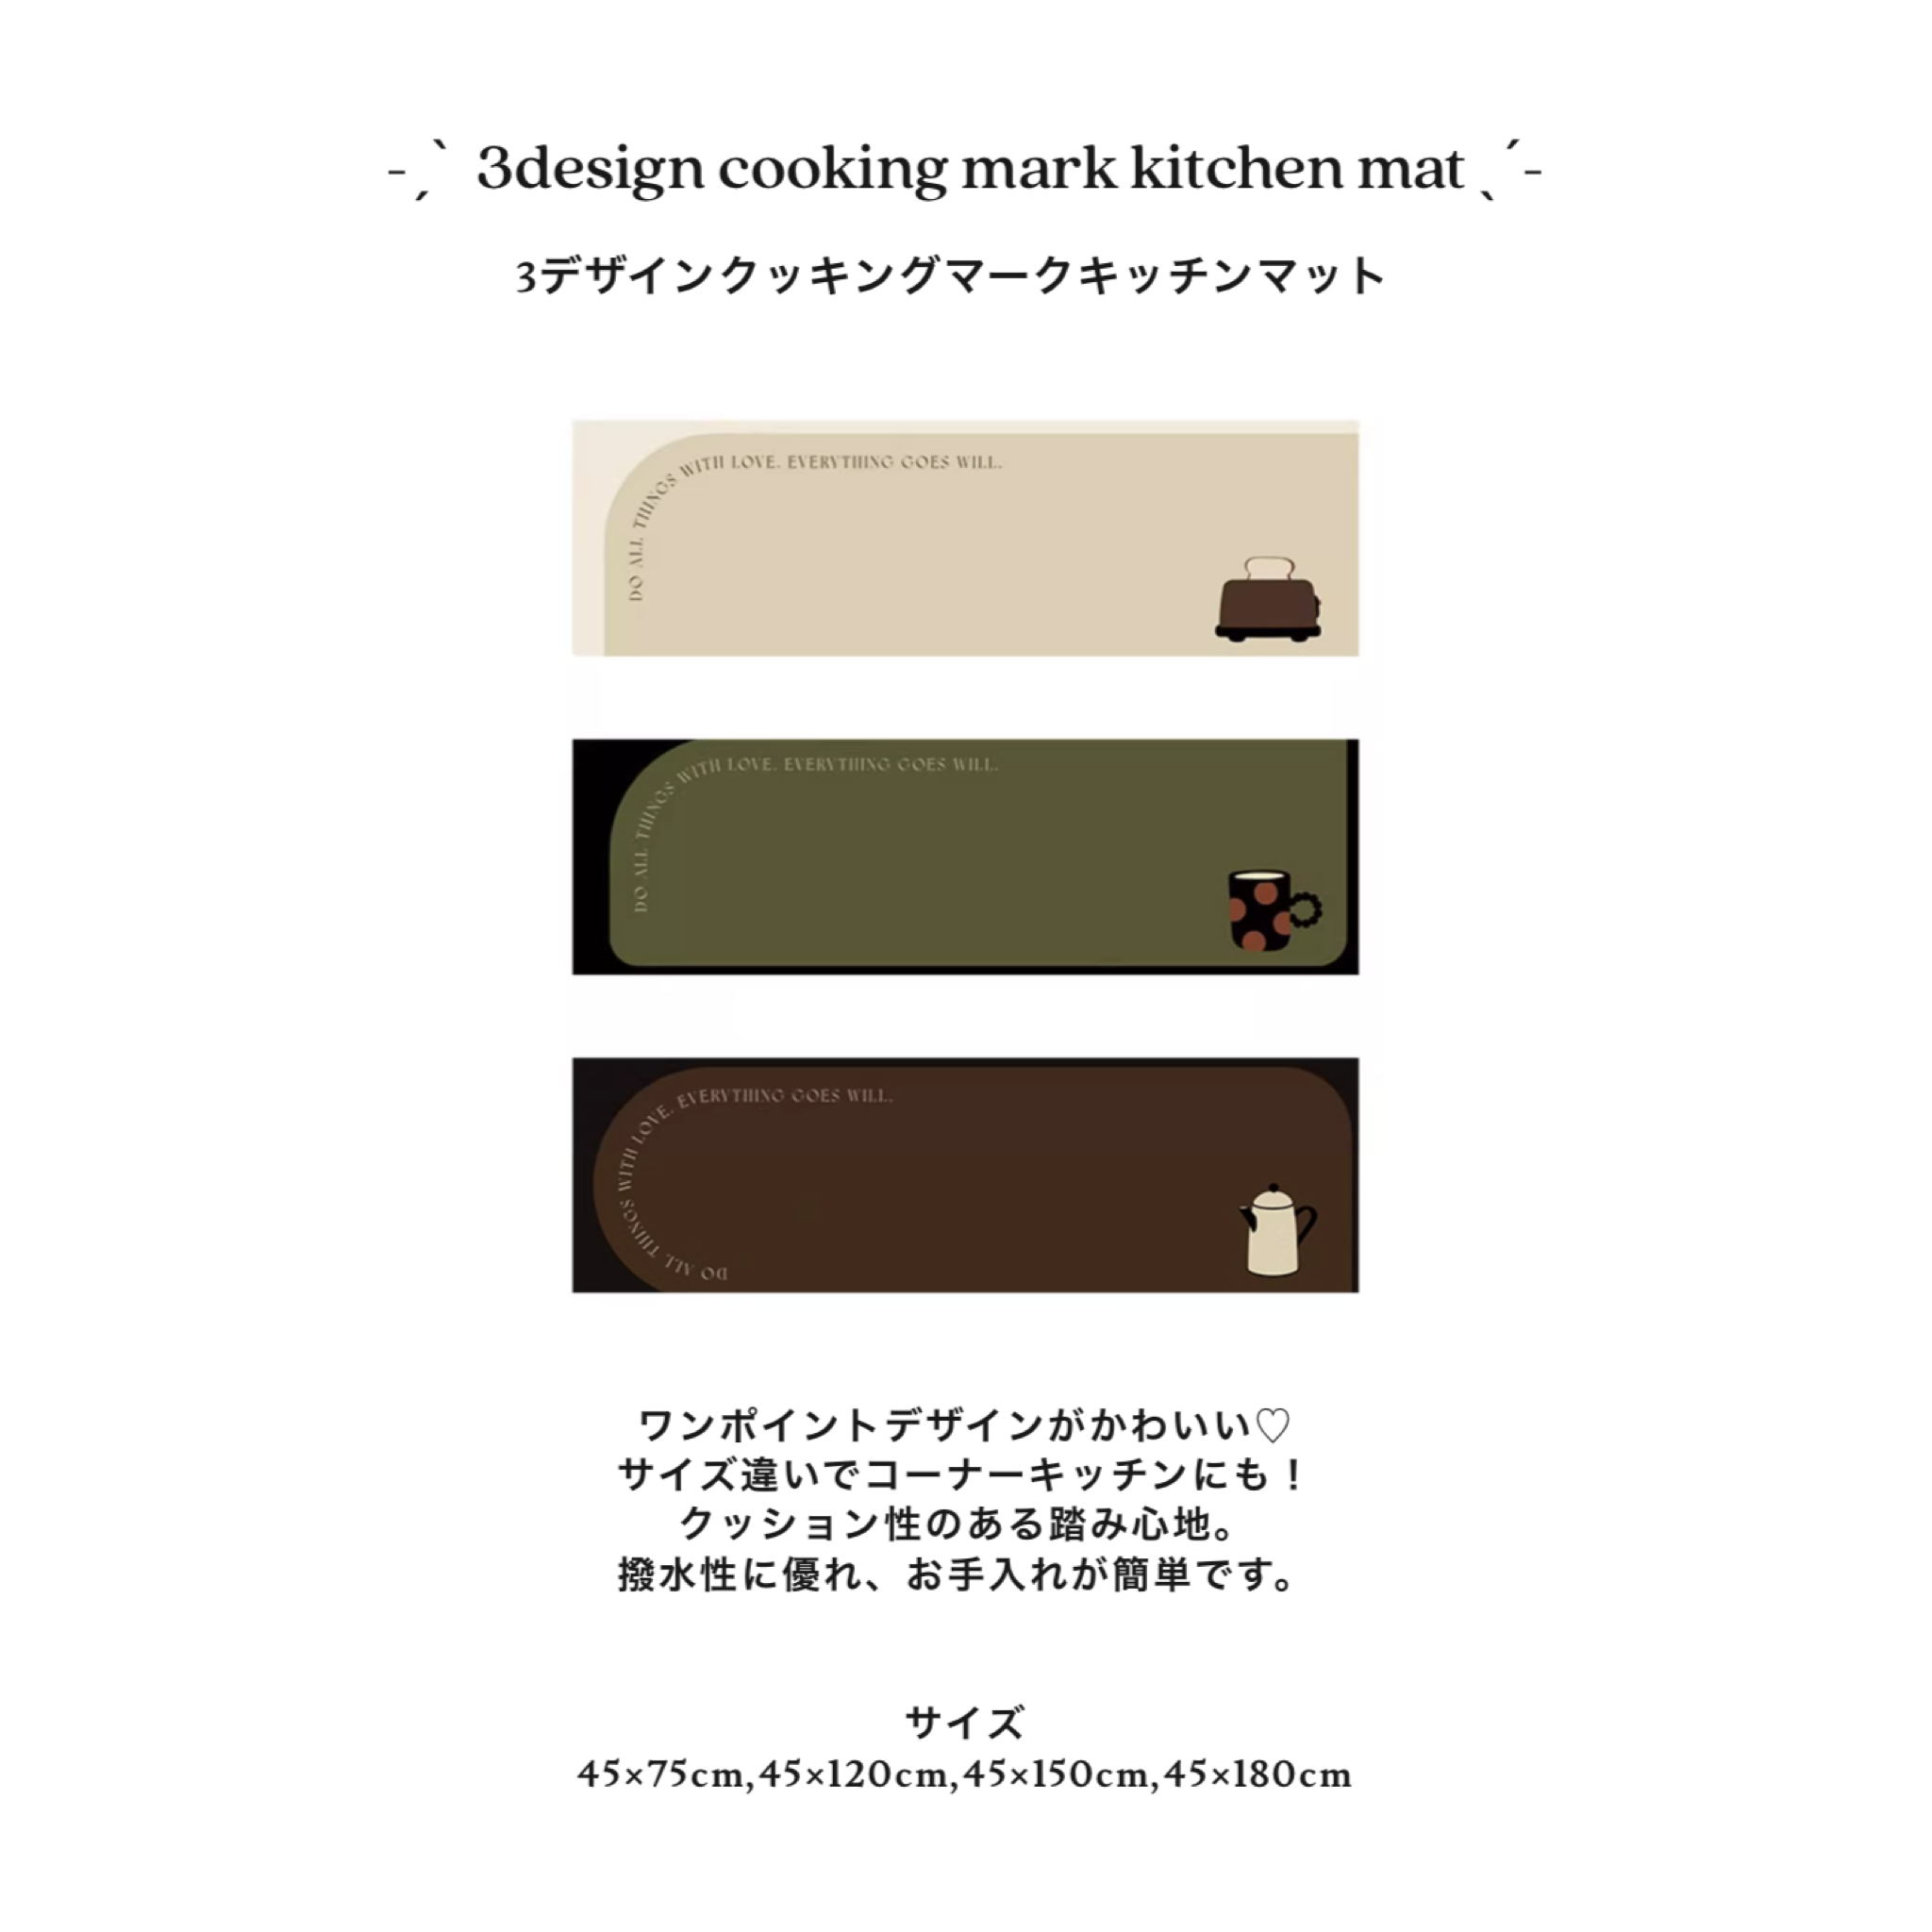 3design cooking mark kitchen mat